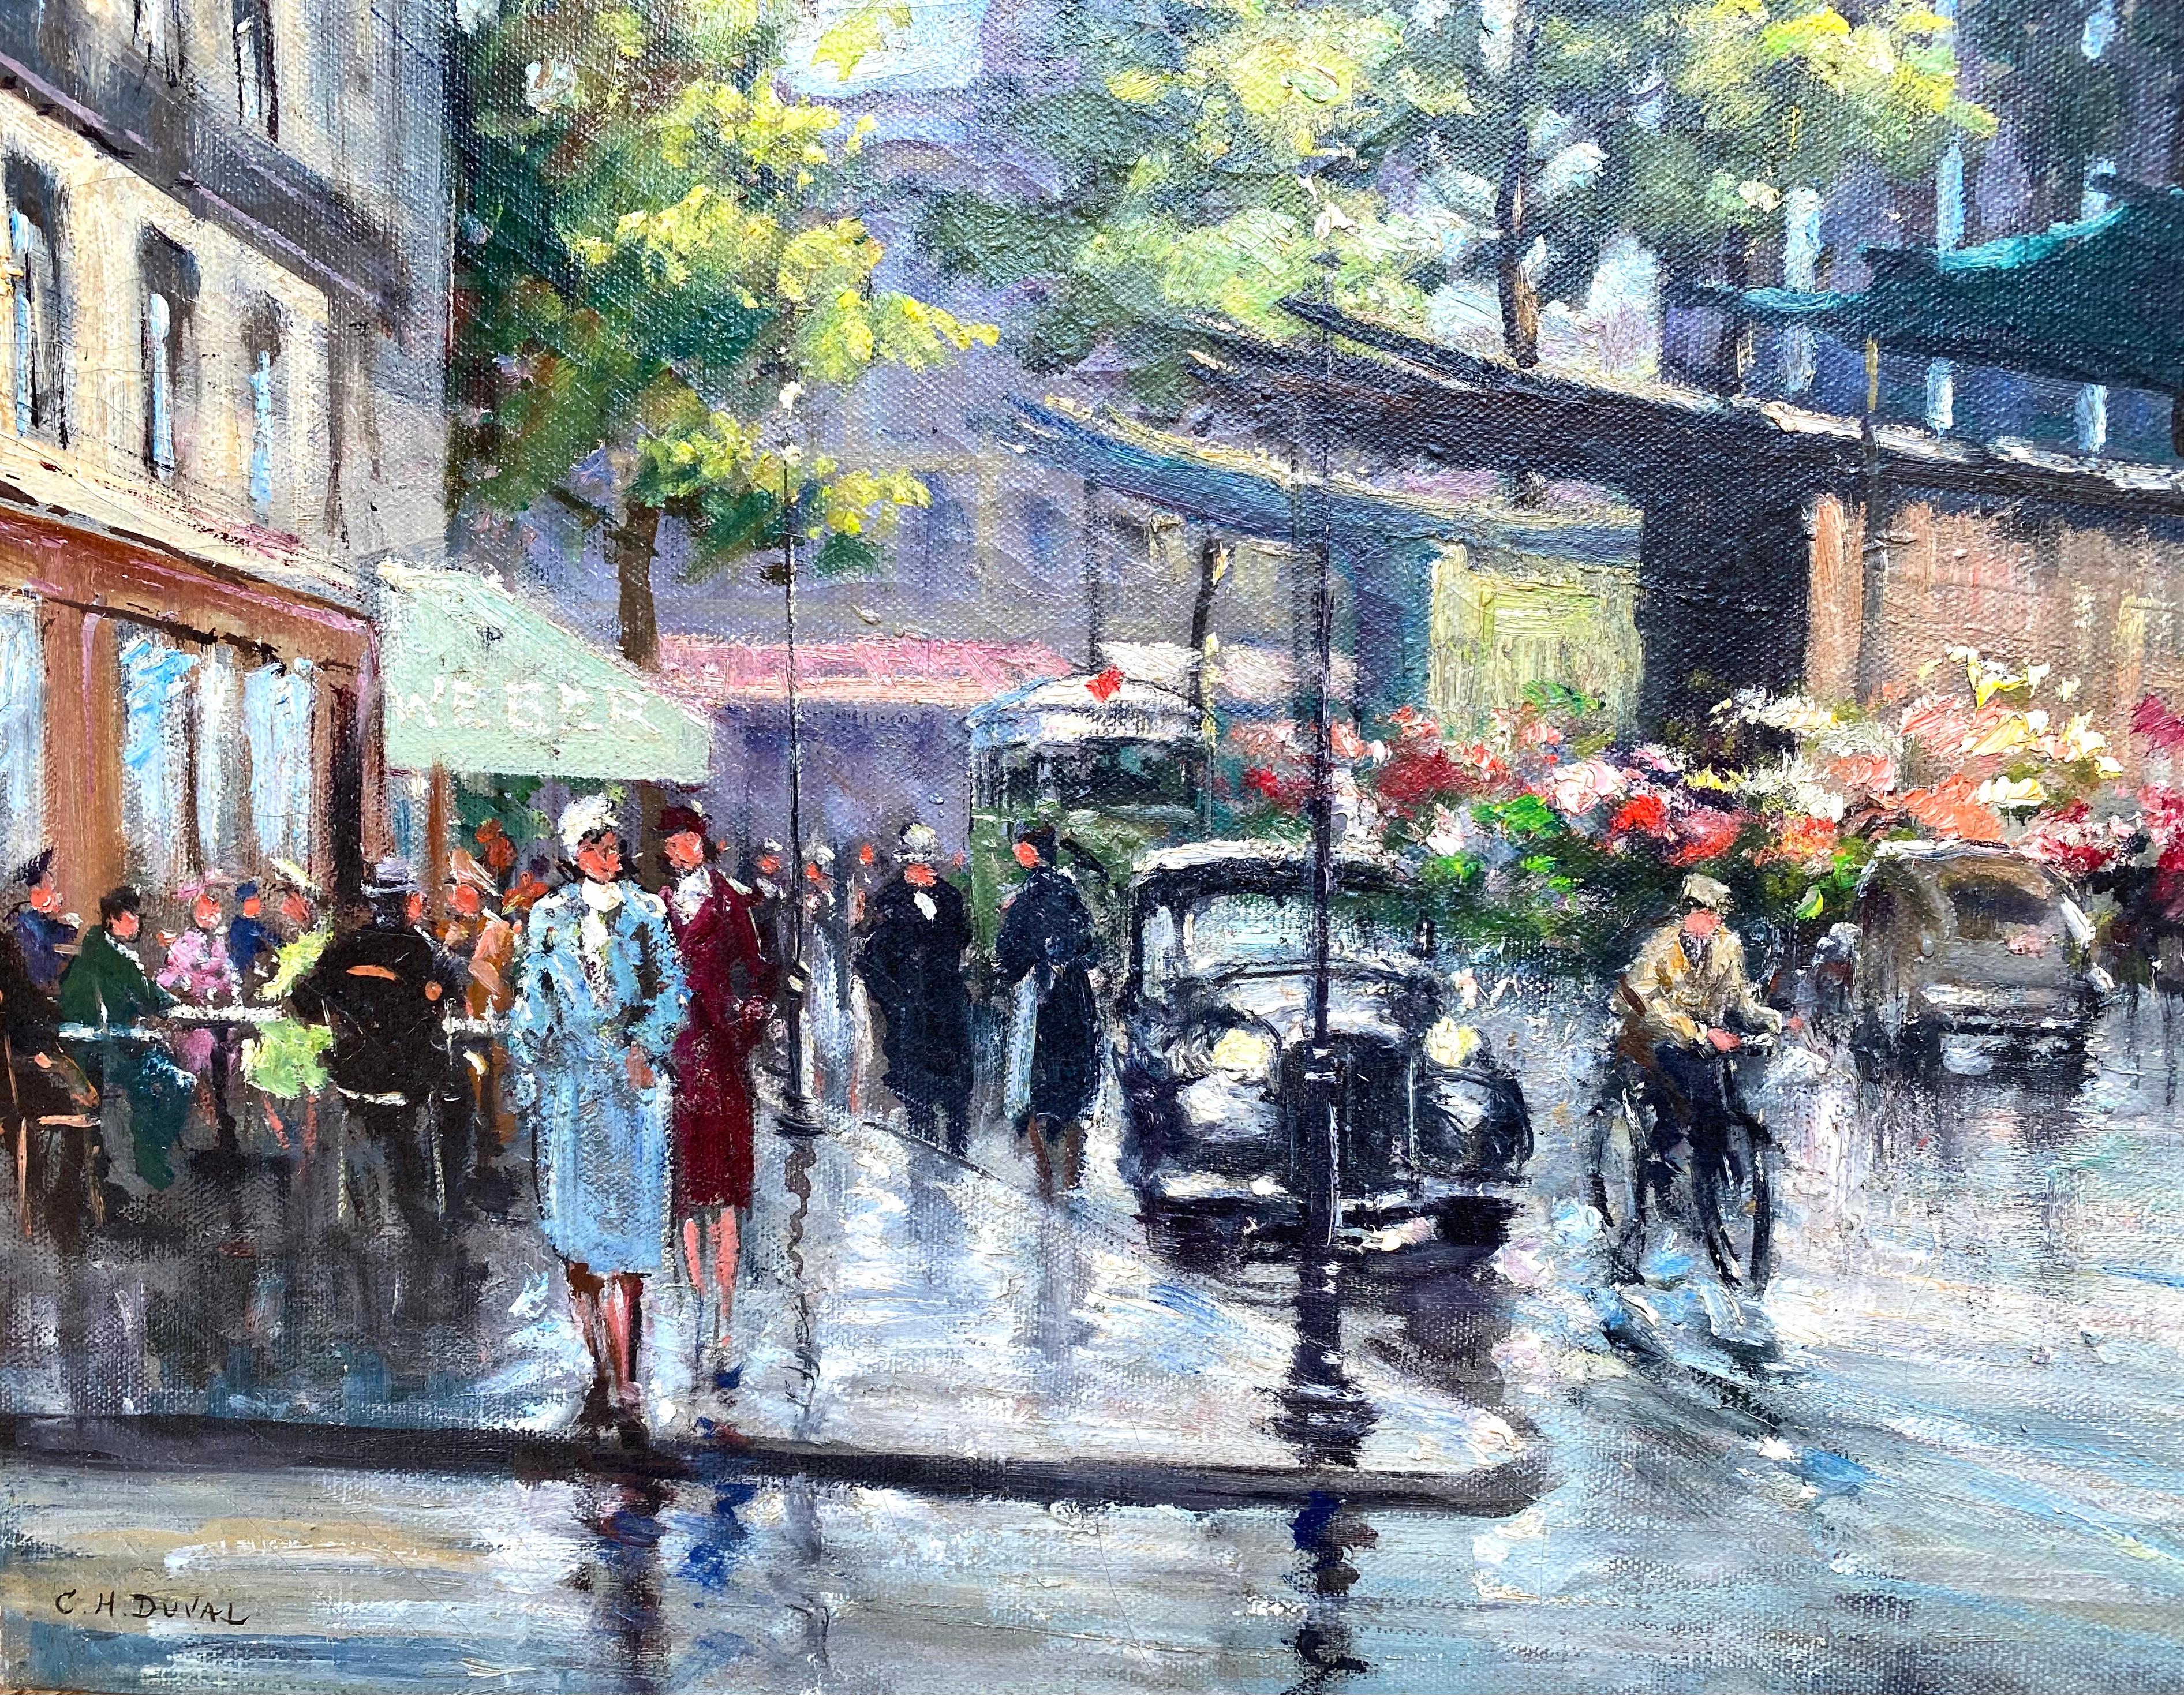 “Cafe Weber, Paris” - Post-Impressionist Painting by C.H. Duval